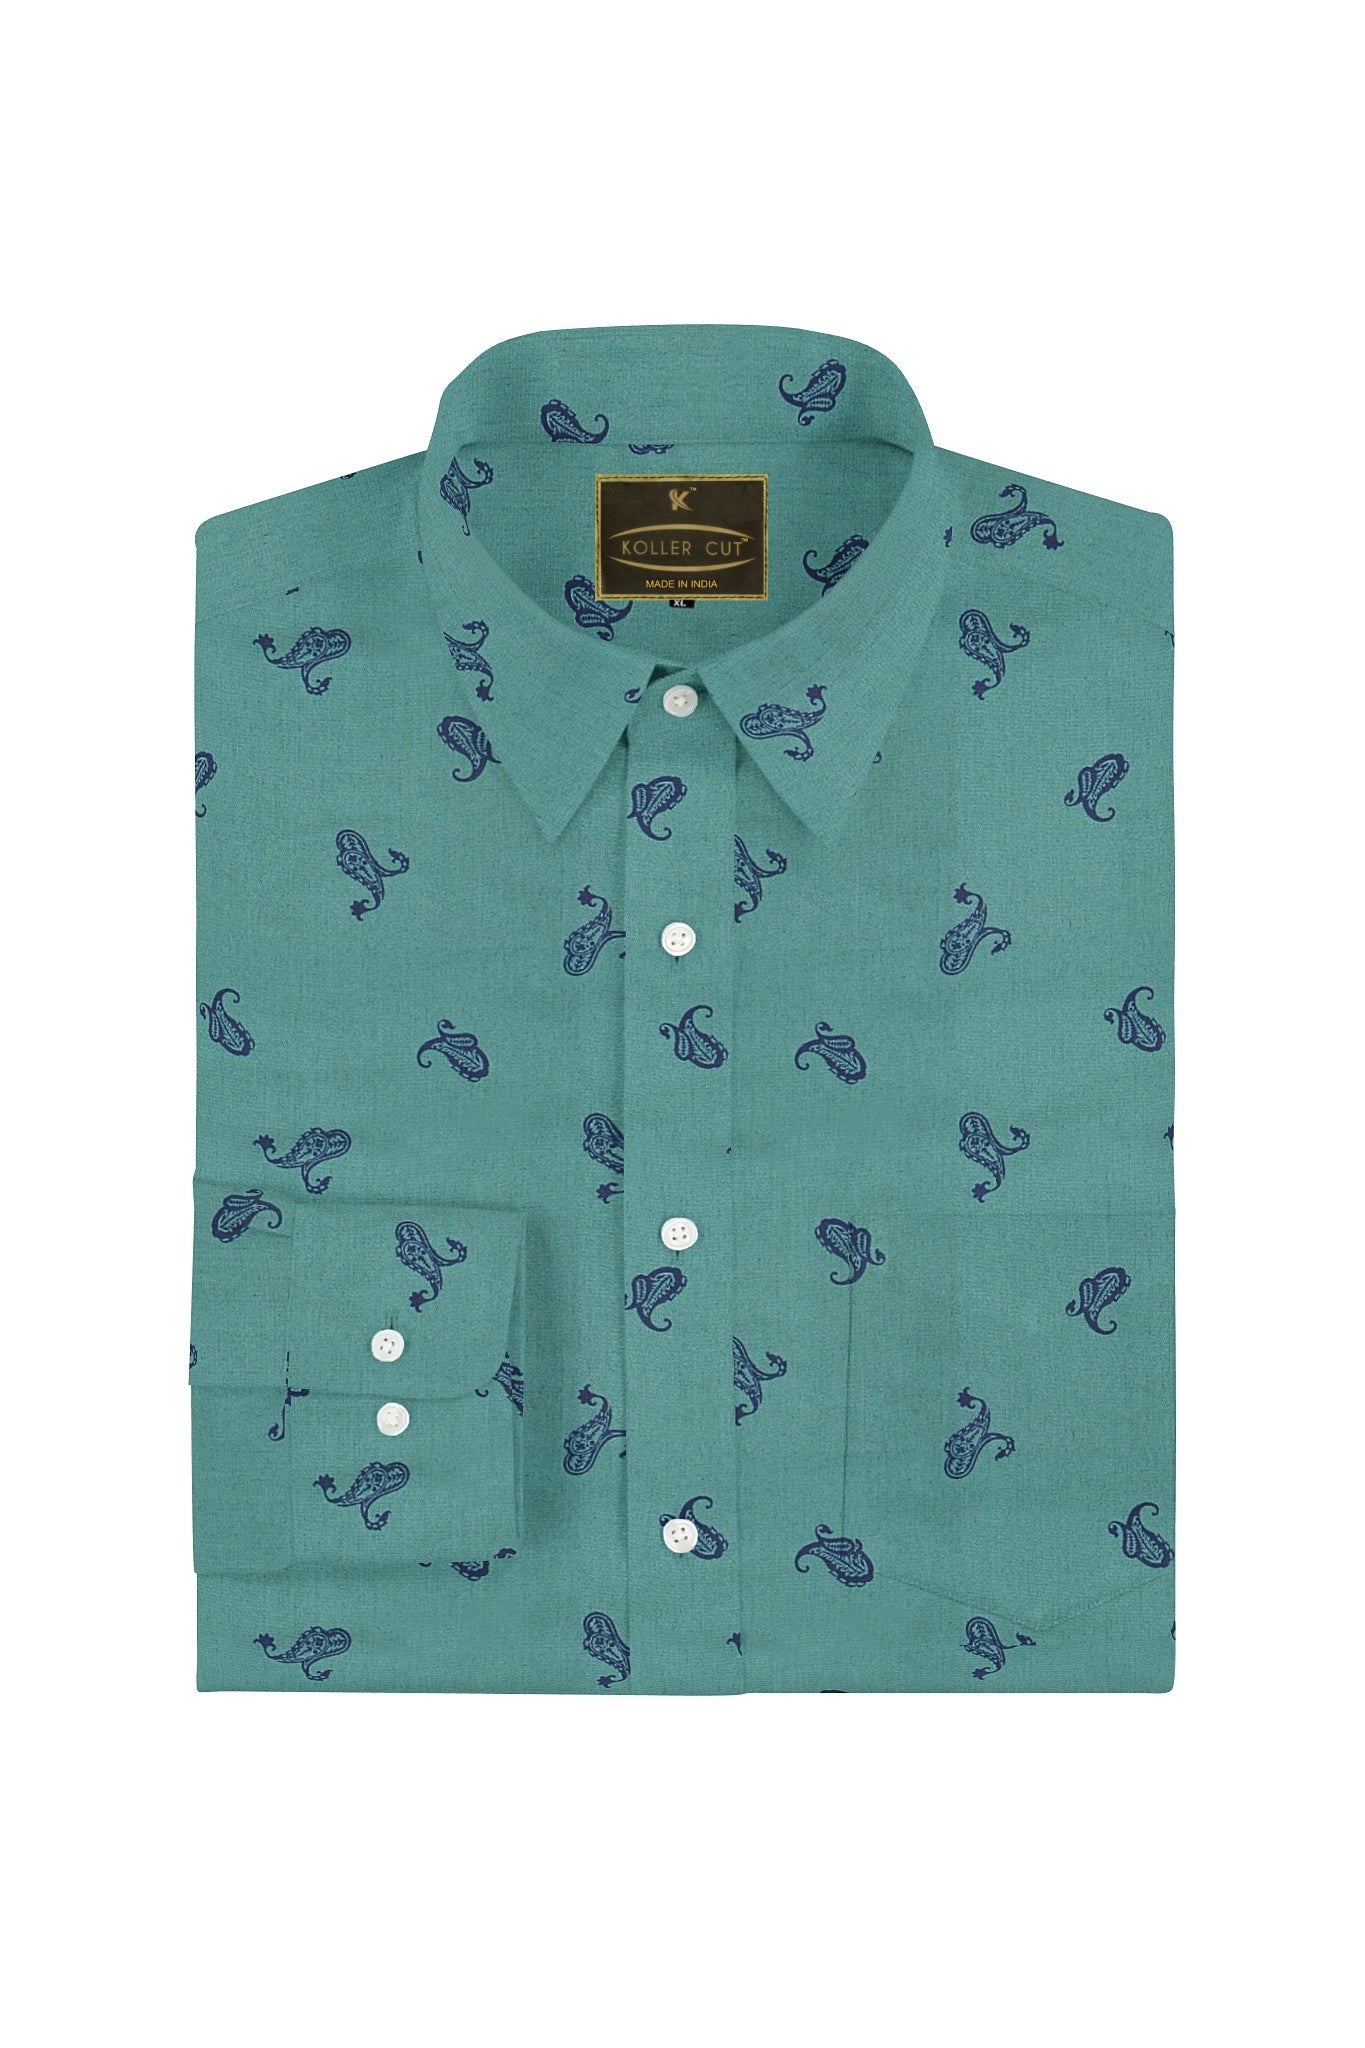 Pine Green with Japanese Koi Carp Fish Printed Men's Cotton Shirt